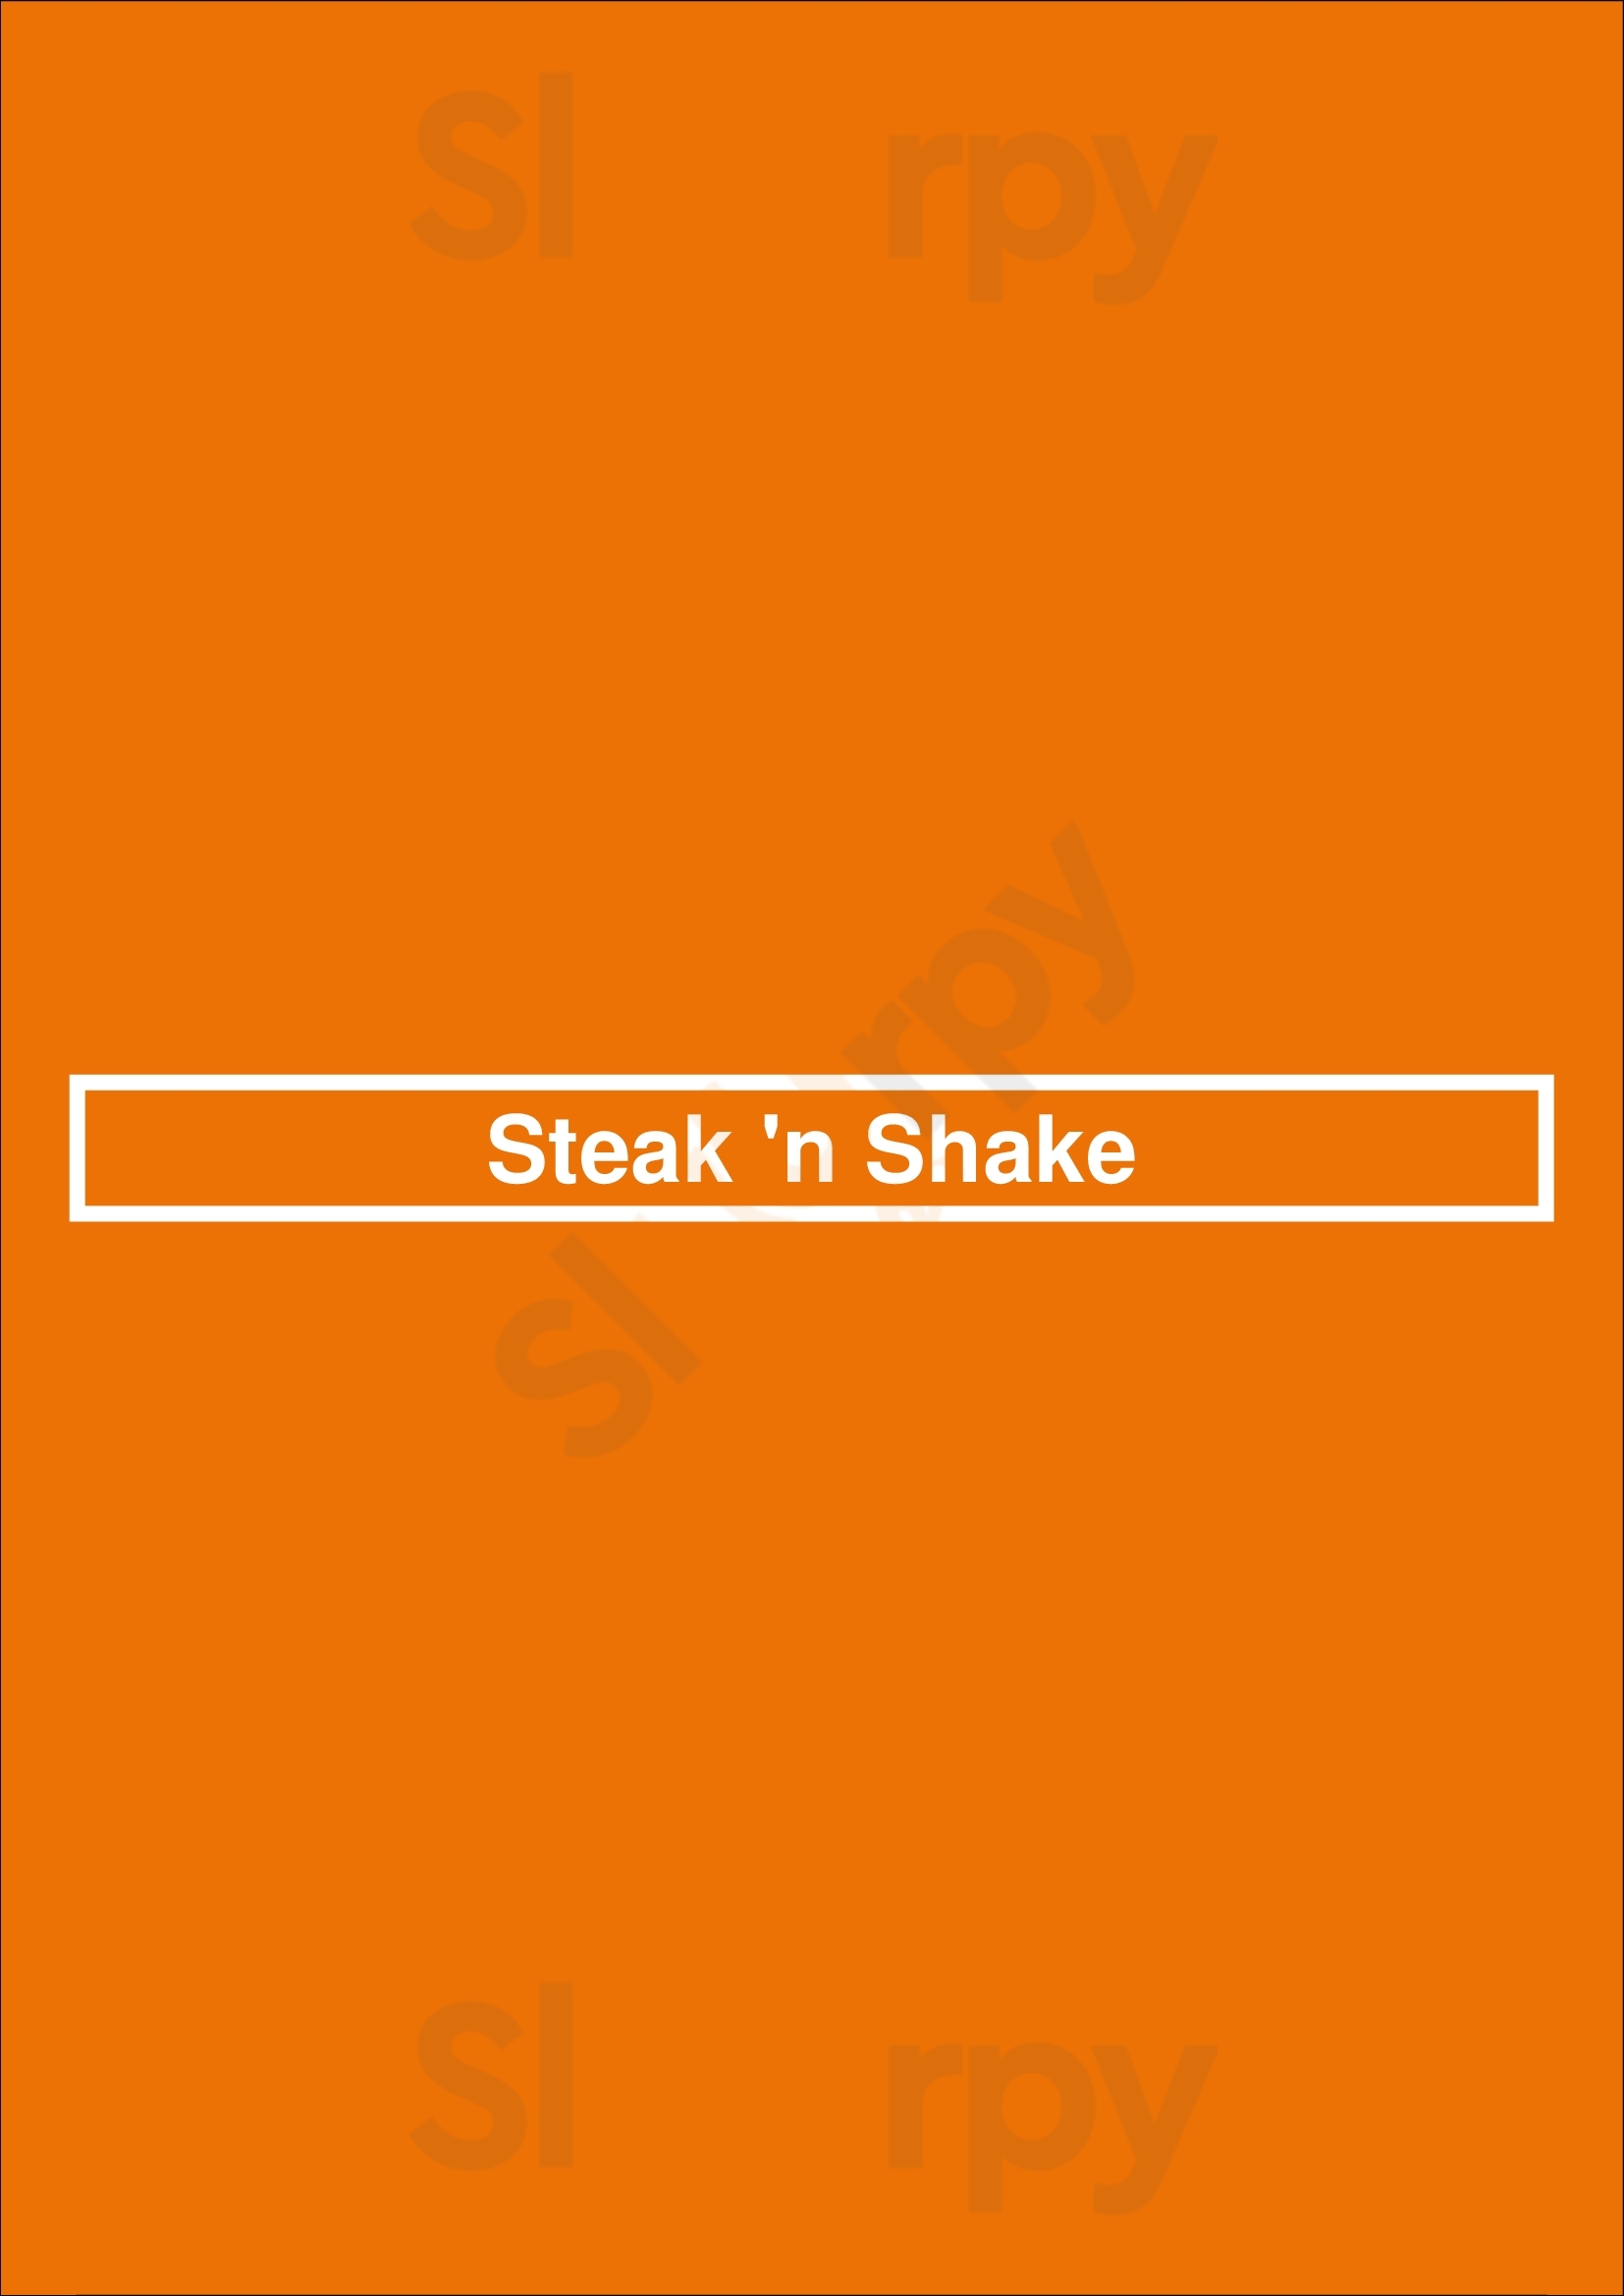 Steak 'n Shake Kentwood Menu - 1